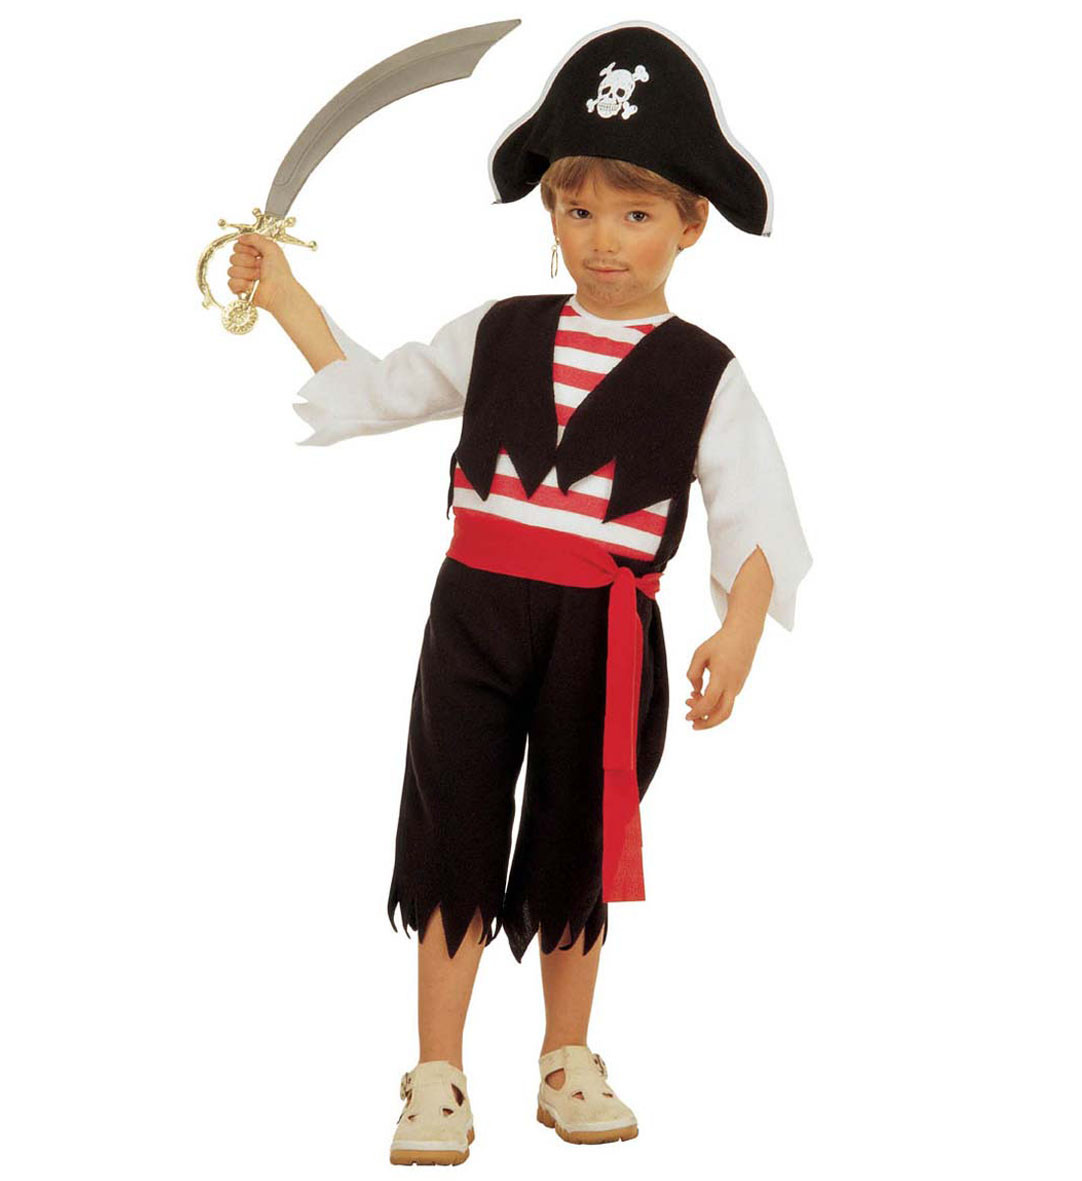 Costume Carnevale Bimbo Pirata  pelusciamo store